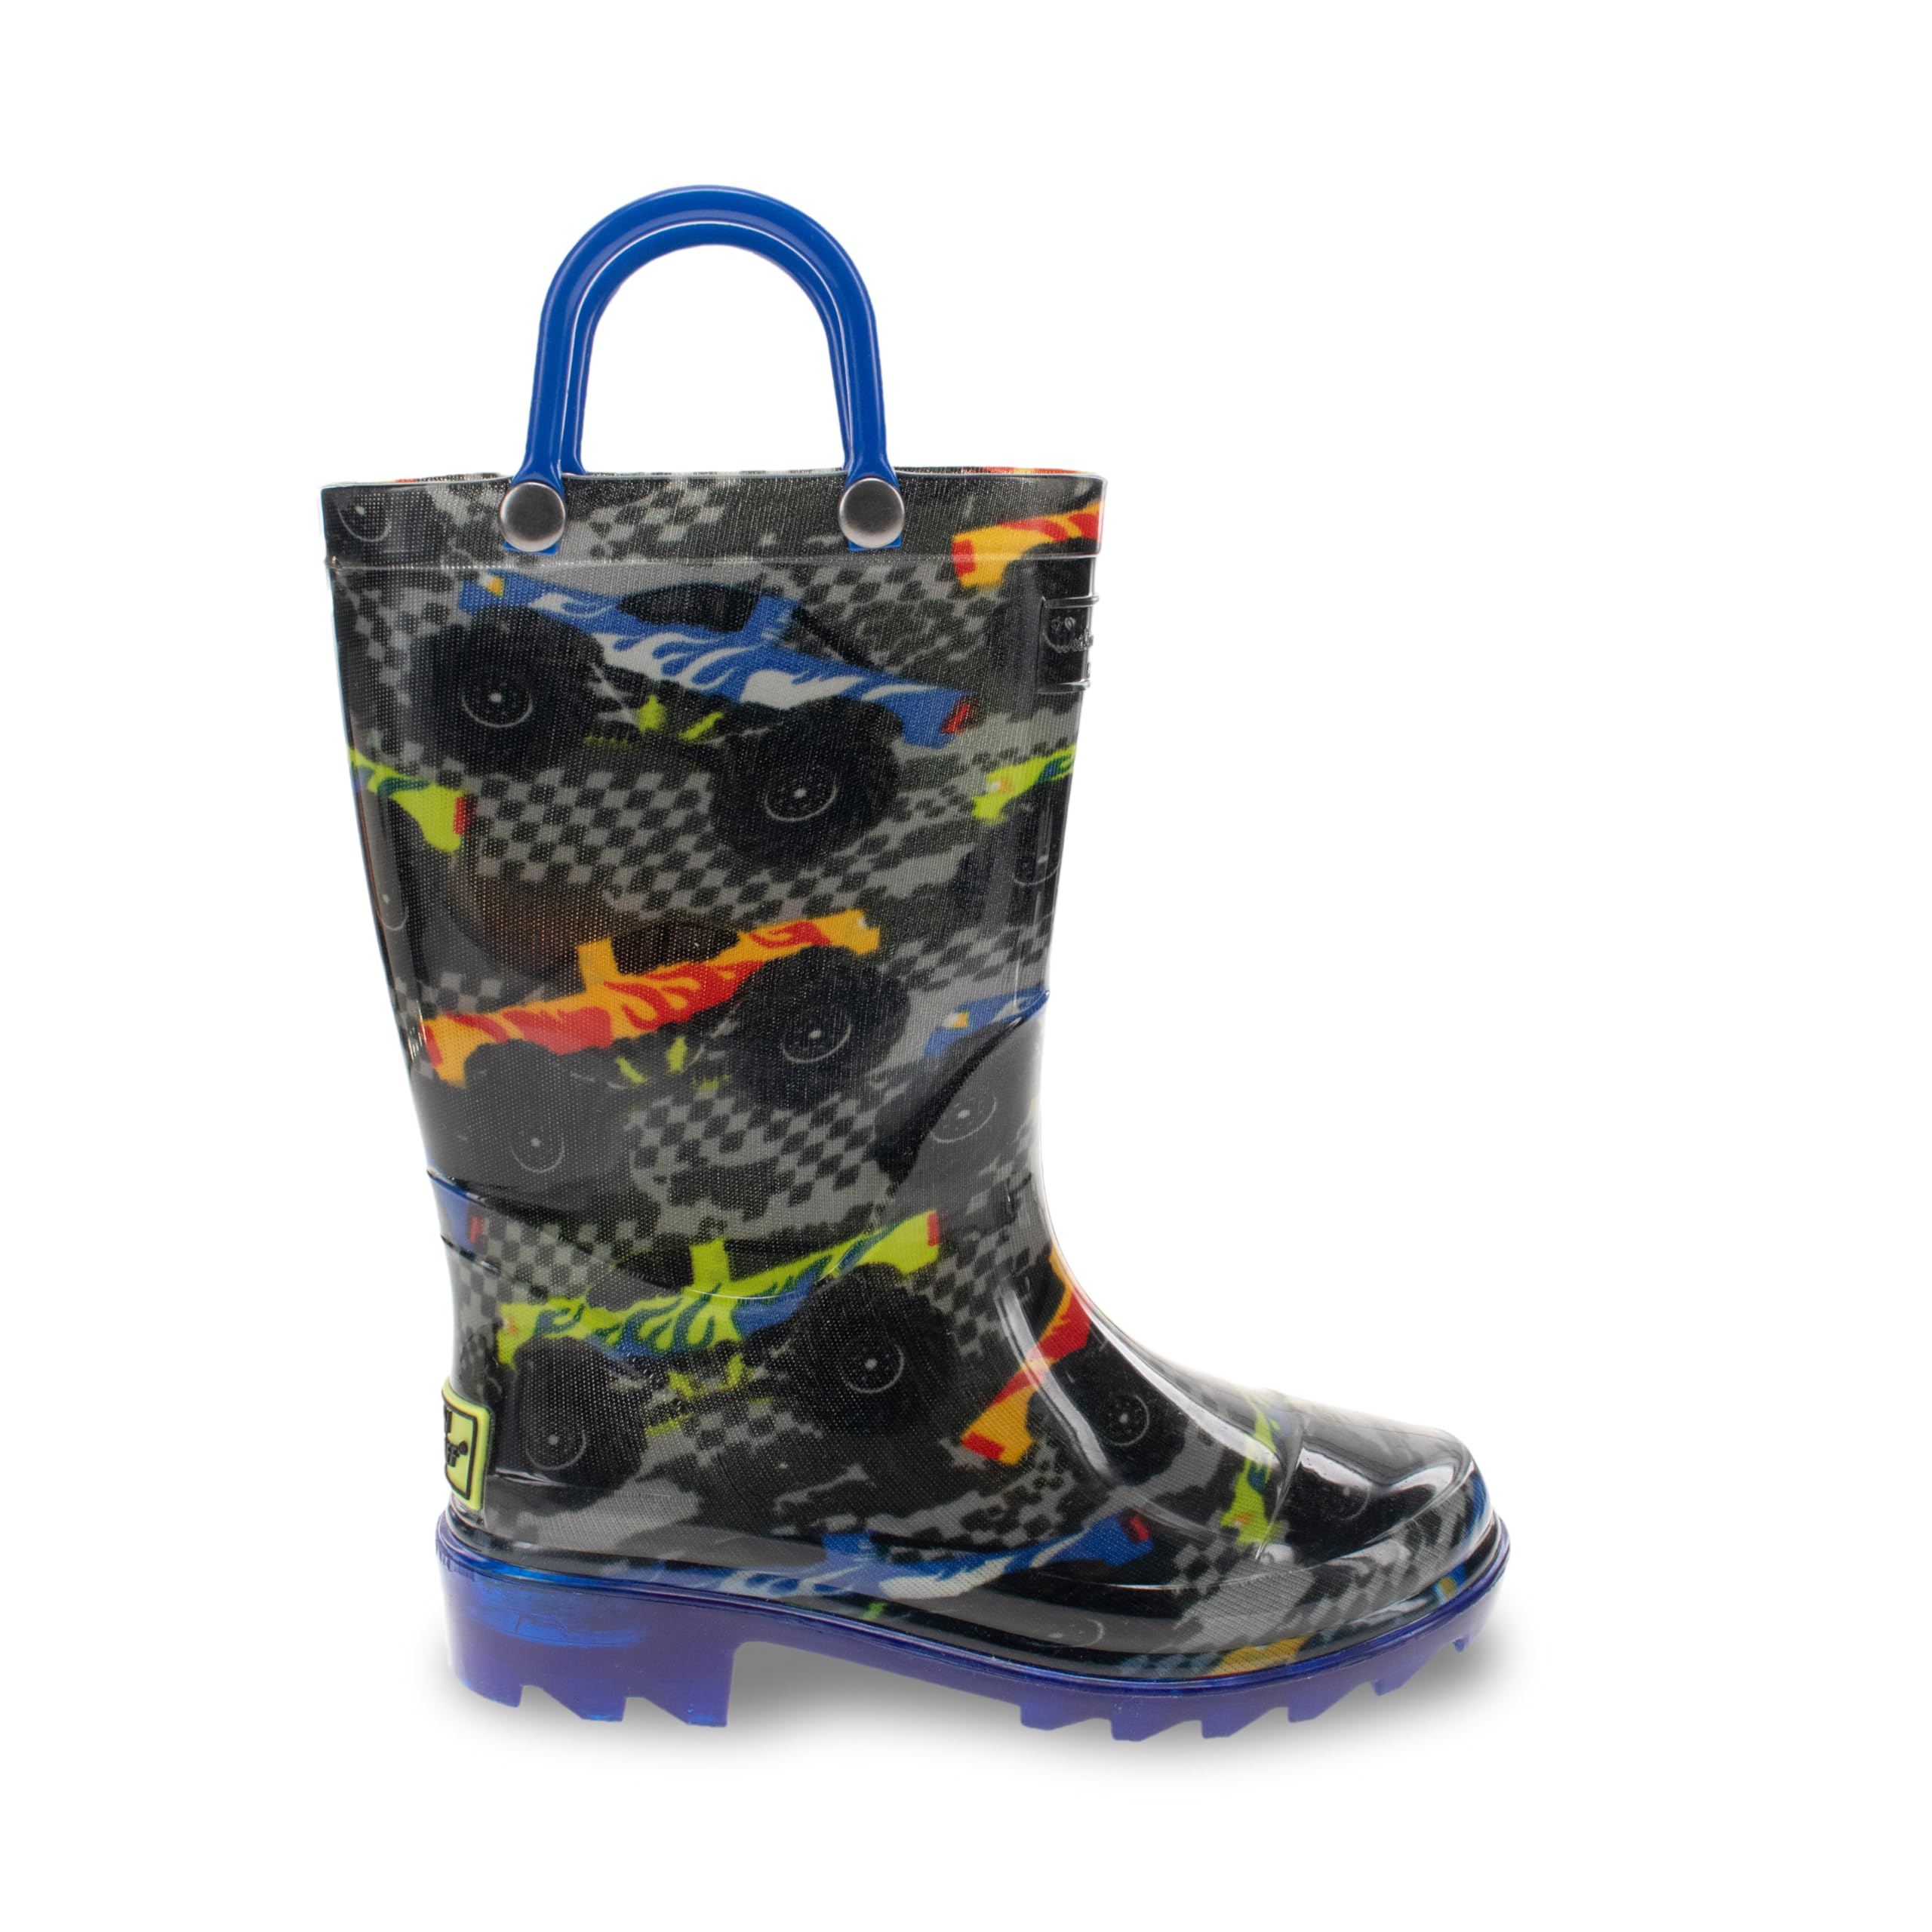 Western Chief Light-Up Waterproof Rain Boot, Drag Race, 1 US Unisex Little Kid